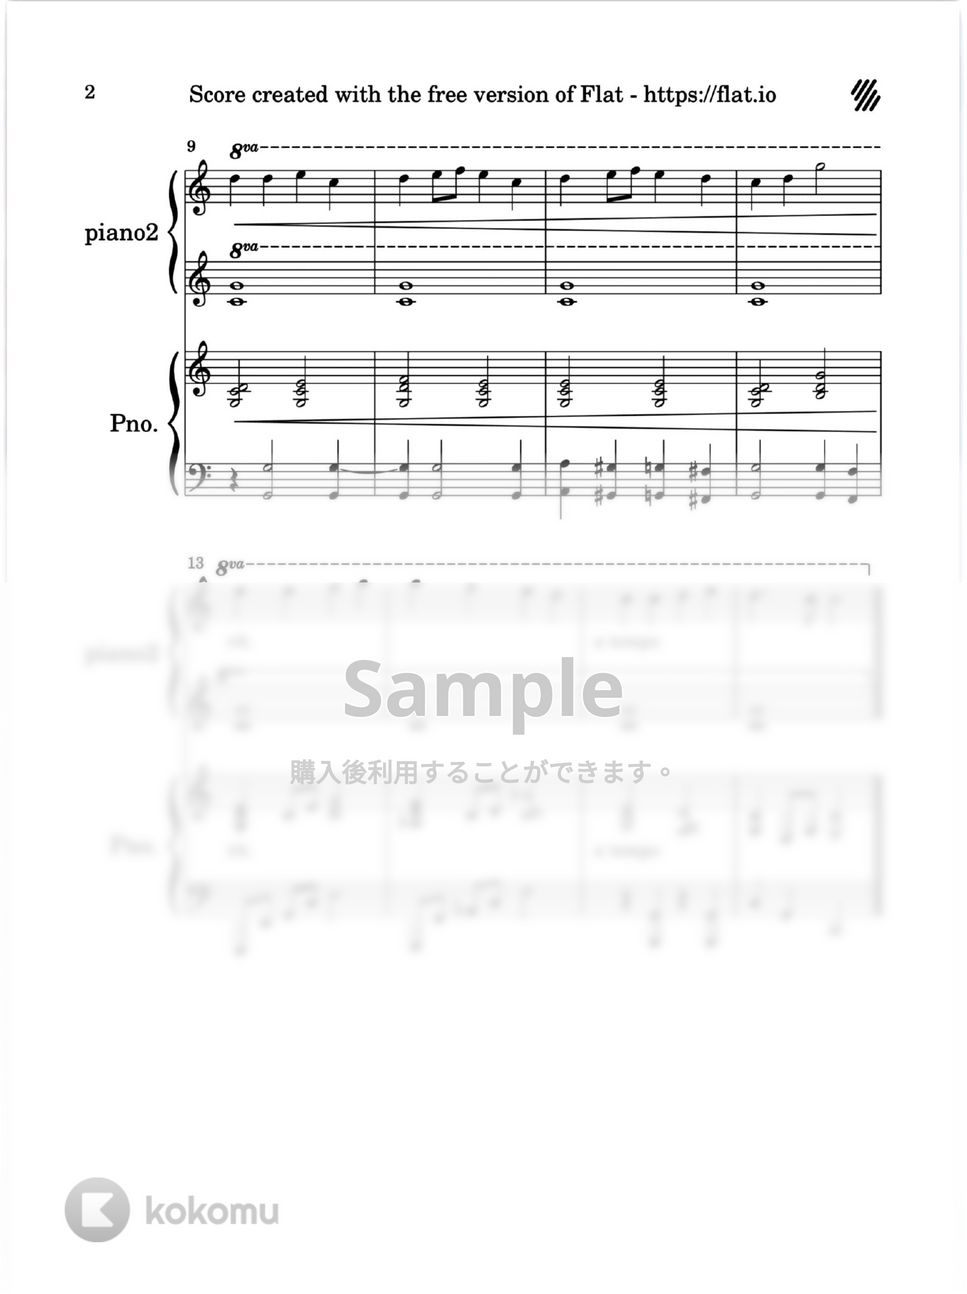 Beethoven - 〈連弾〉歓喜の歌(よろこびの歌)〜交響曲第9番より〜 by Piano diary of mari